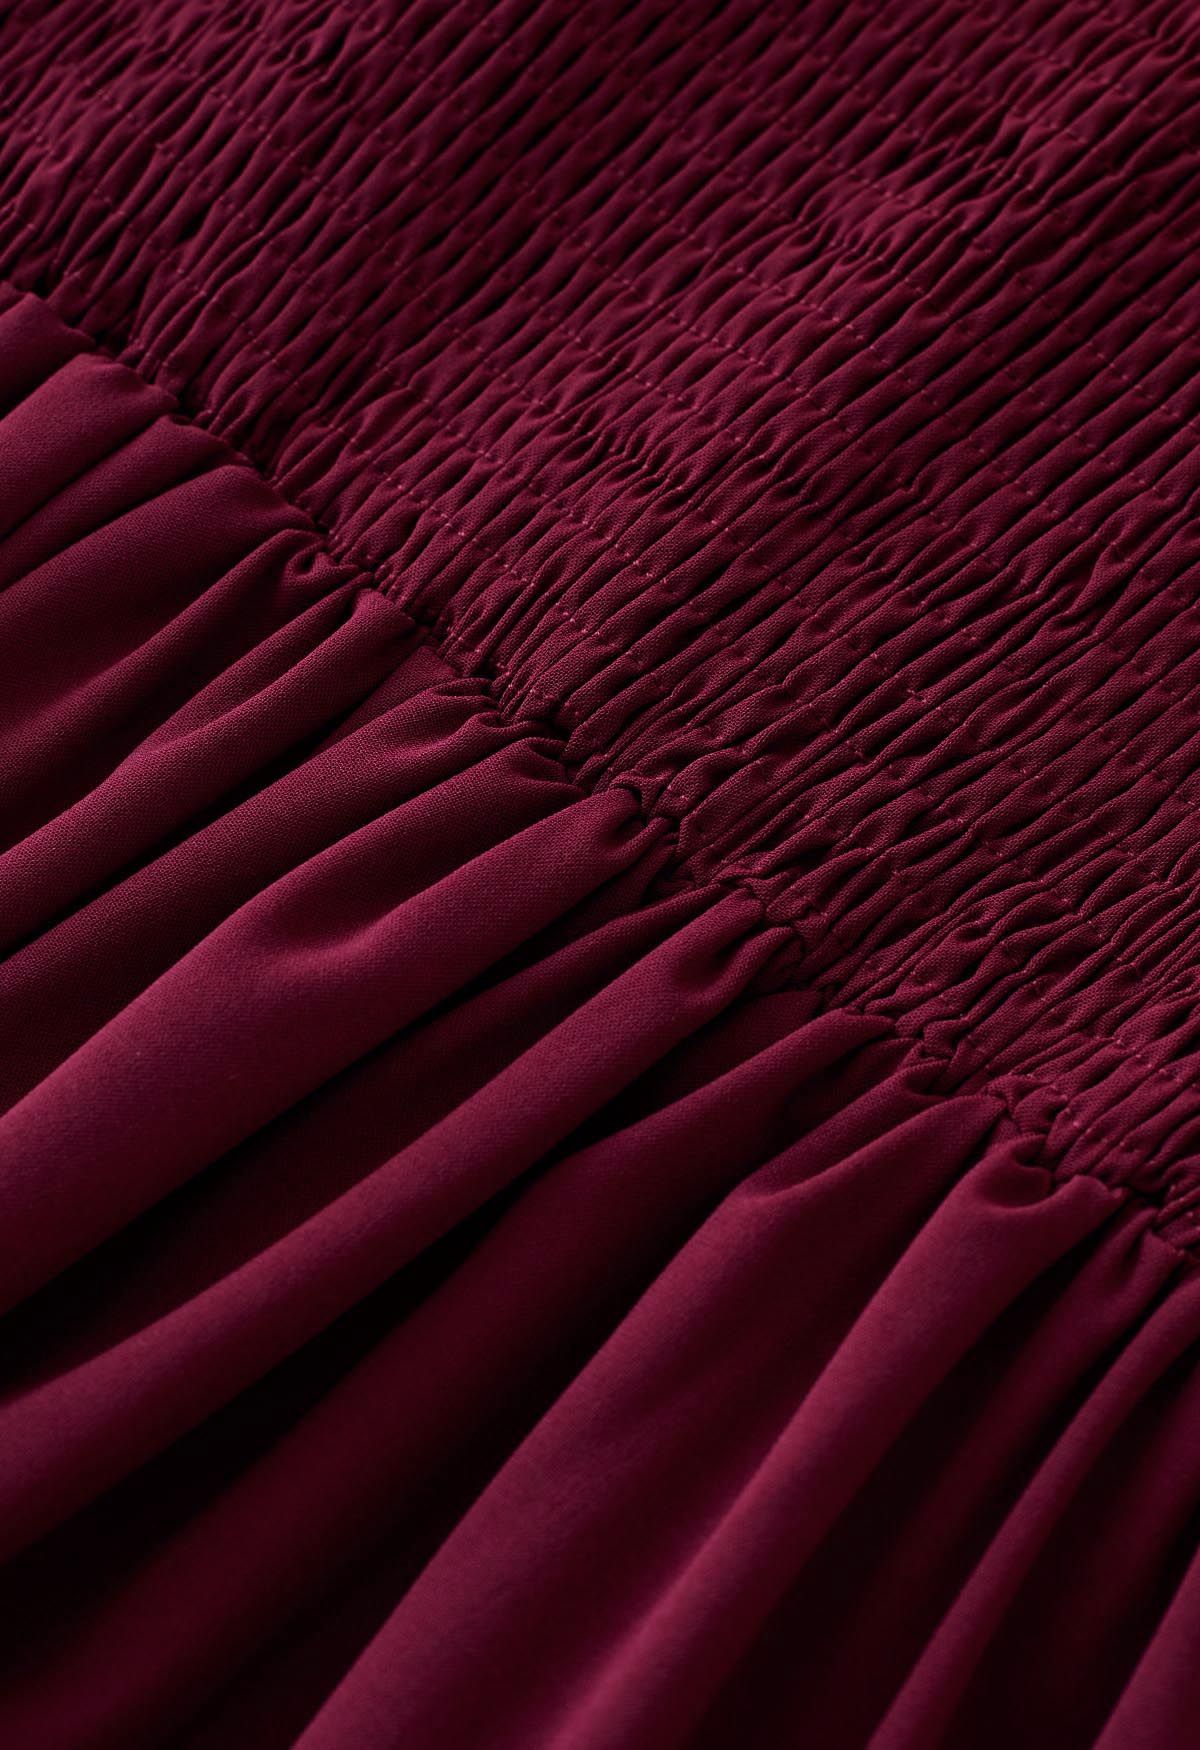 Ruffle Hem Tie-Shoulder Cami Dress in Burgundy